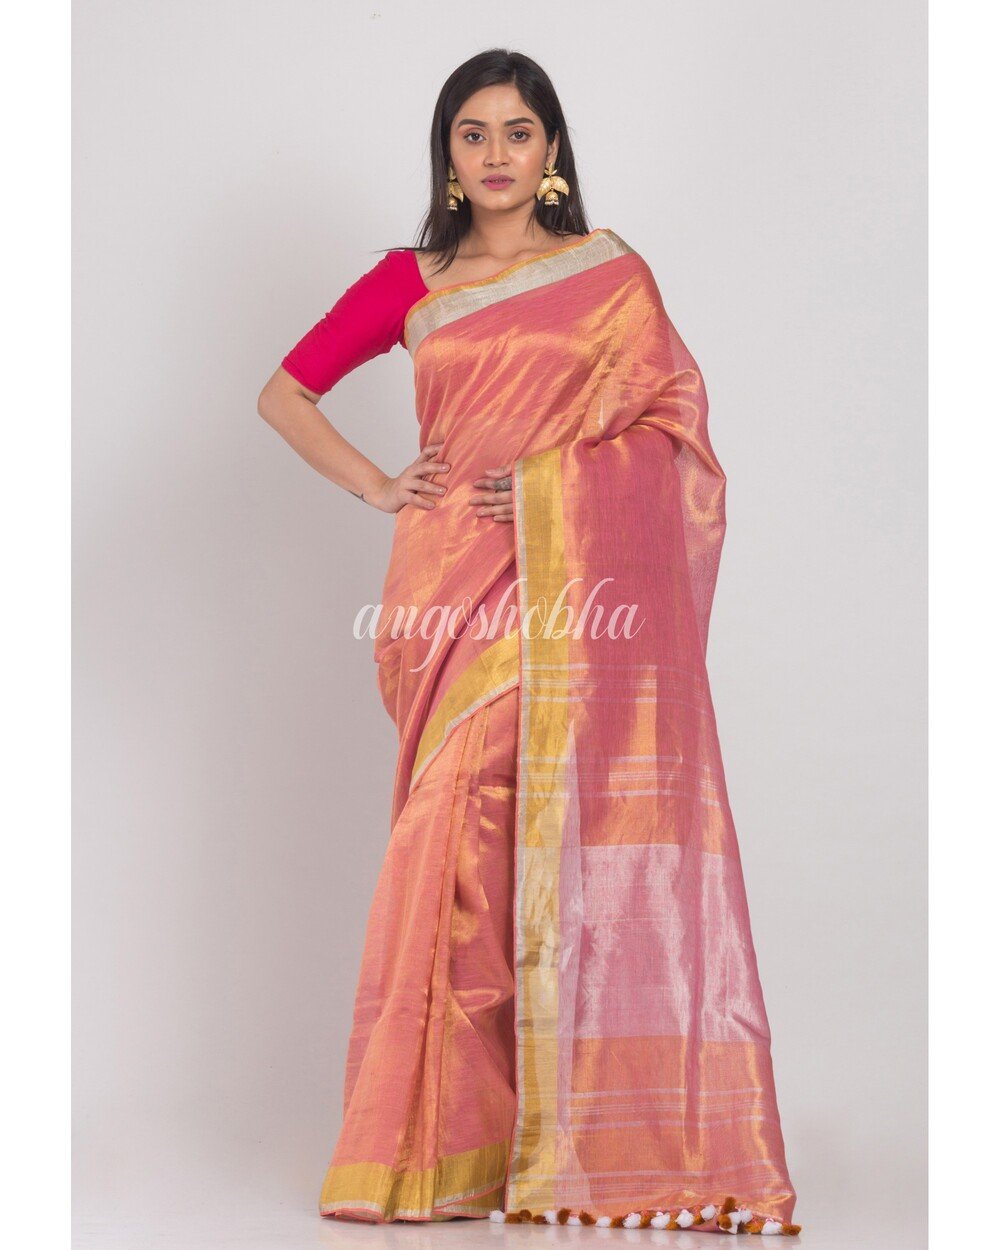 Women's Silver Pink Handloom Tissue Linen Saree - Angoshobha